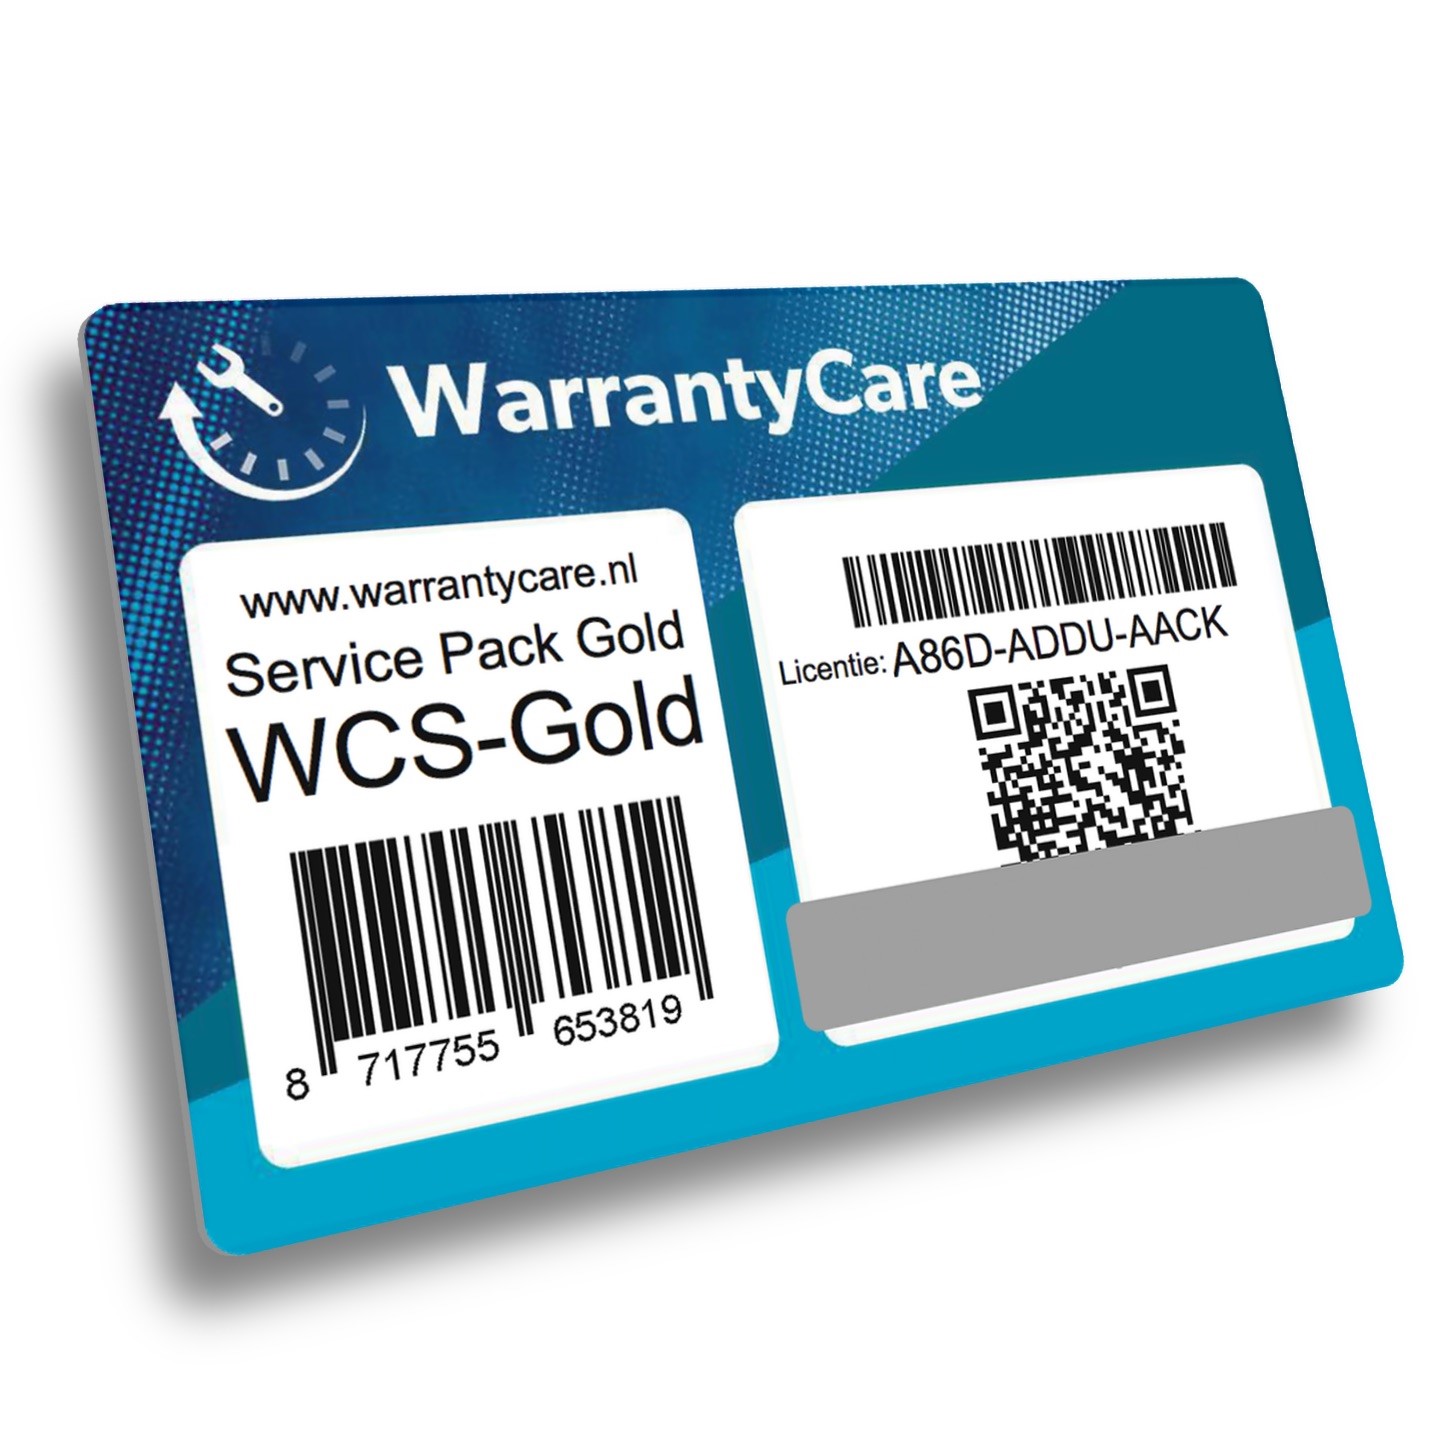 Warrantycare Service Pack G level Gold